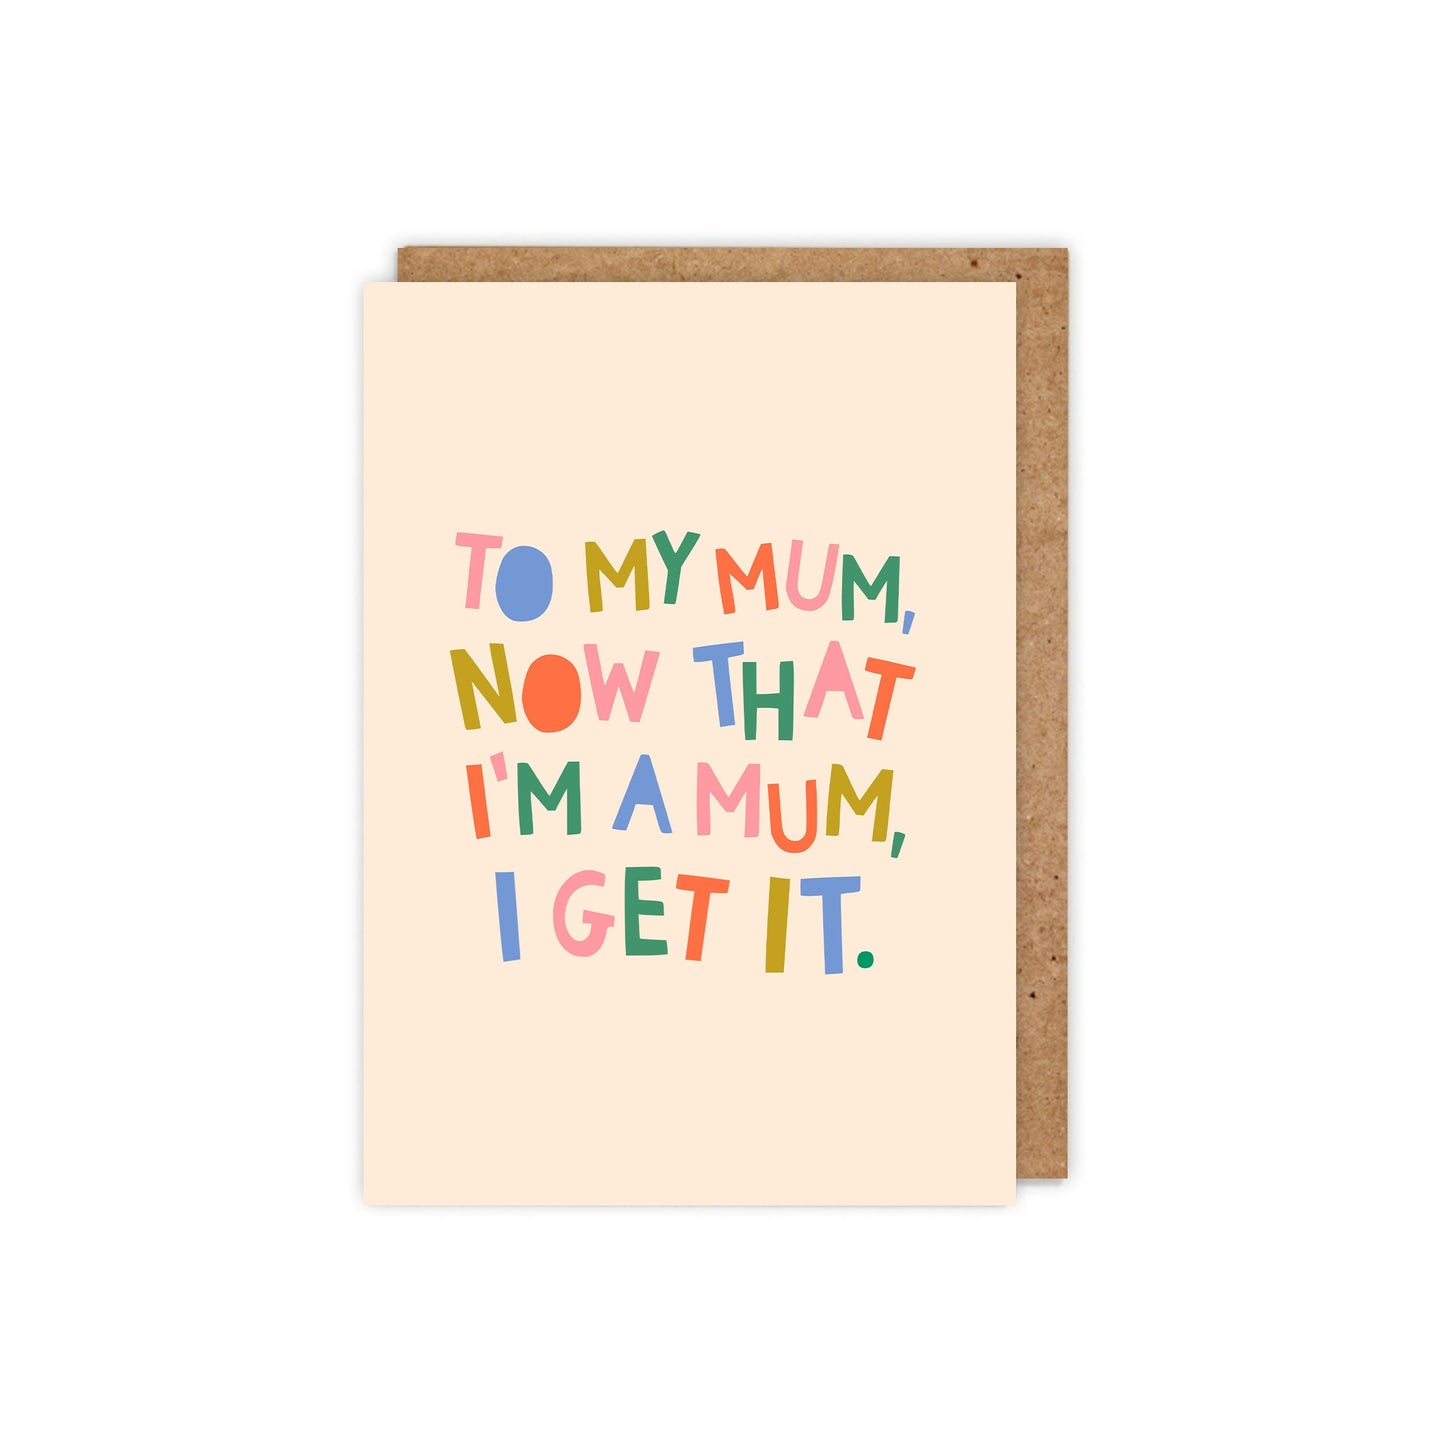 To My Mum / Mom..., I get it. Card